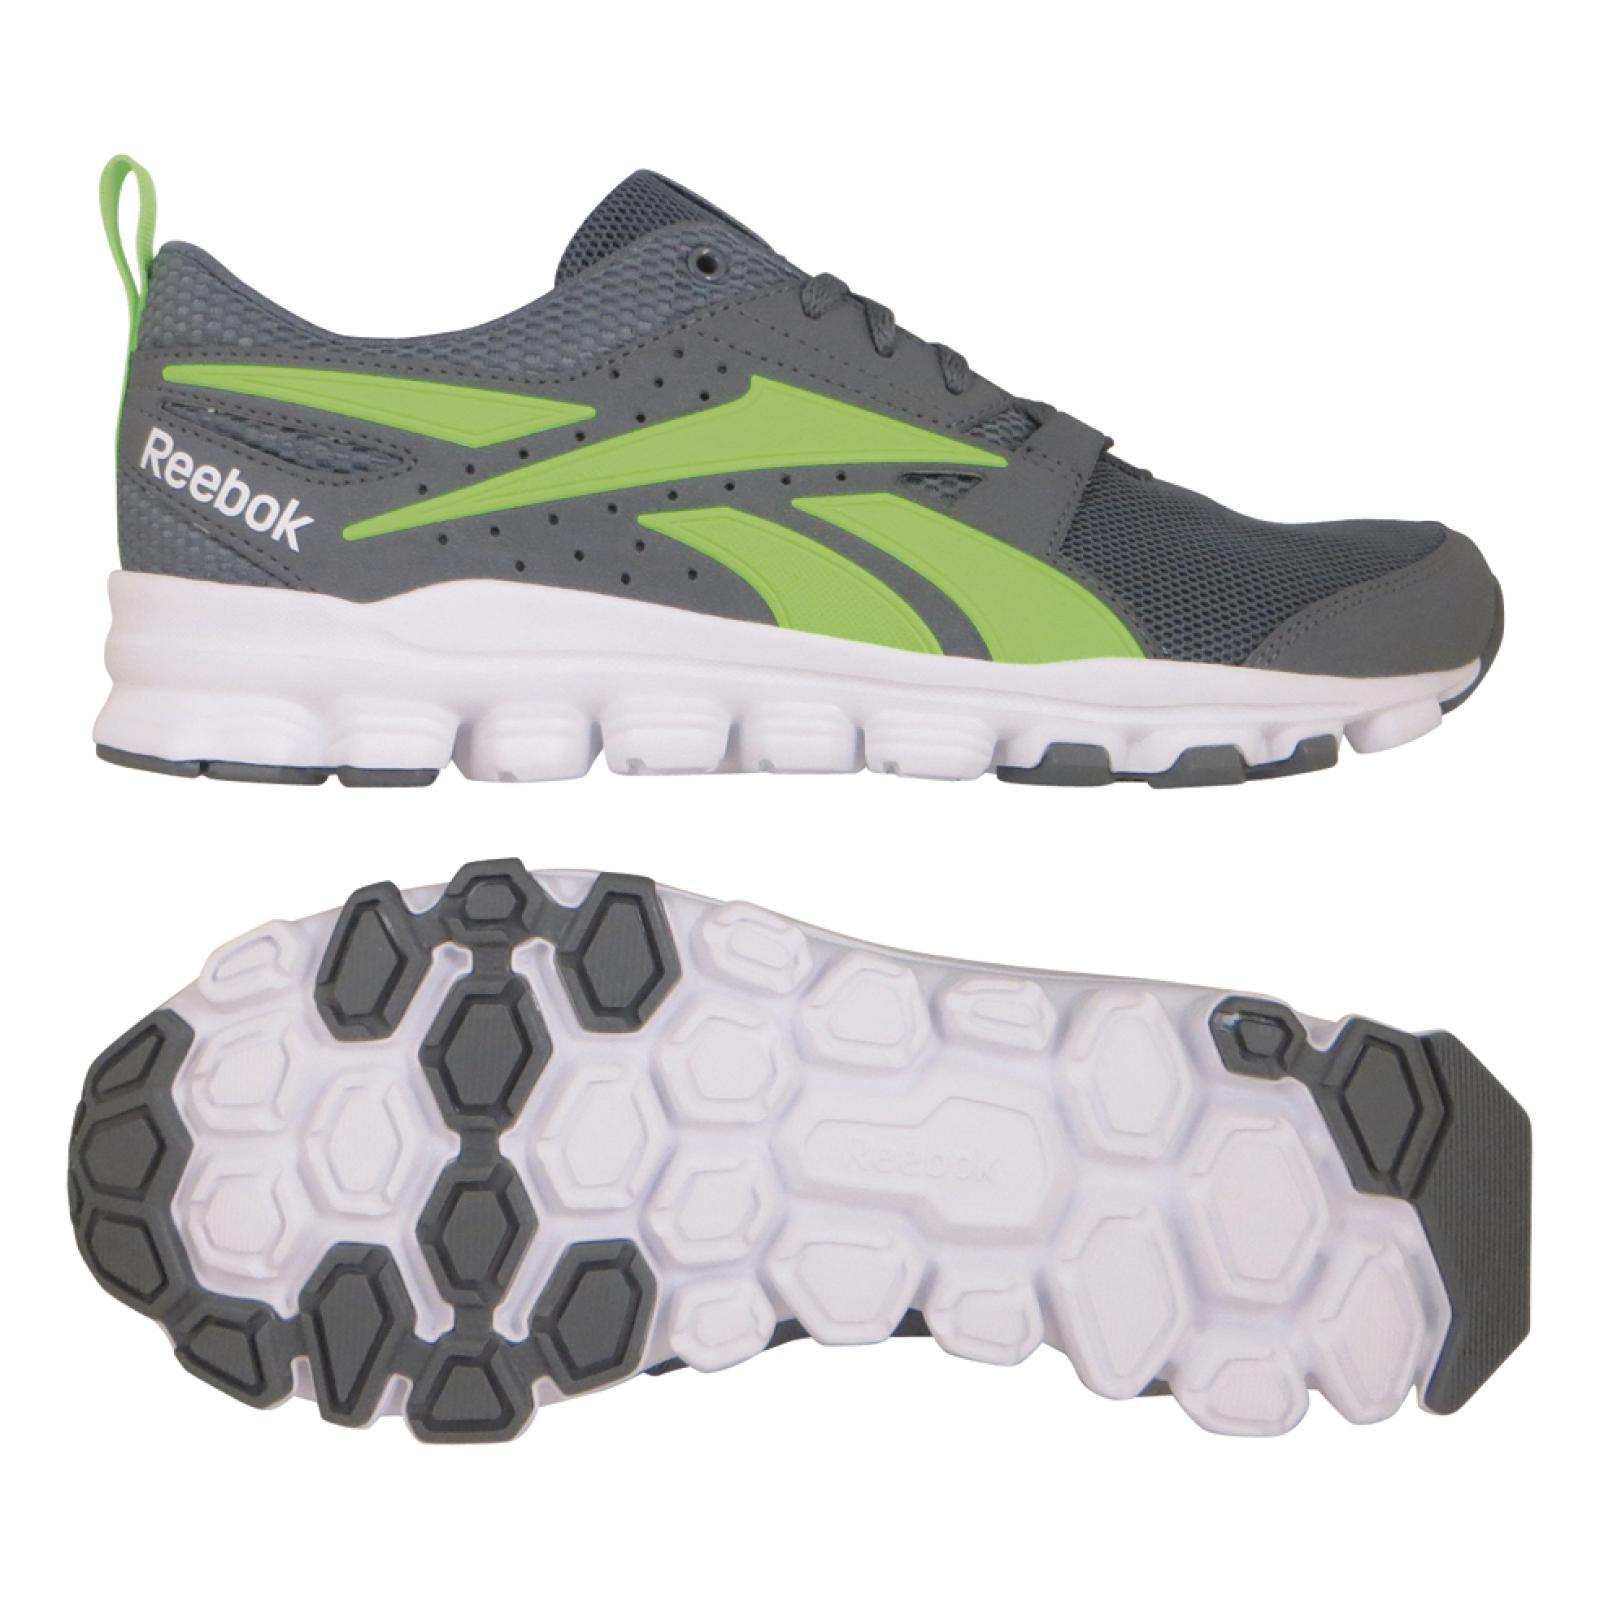 Reebok Men's Hexaffect Sport Athletic Shoe - Gray/Neon Green